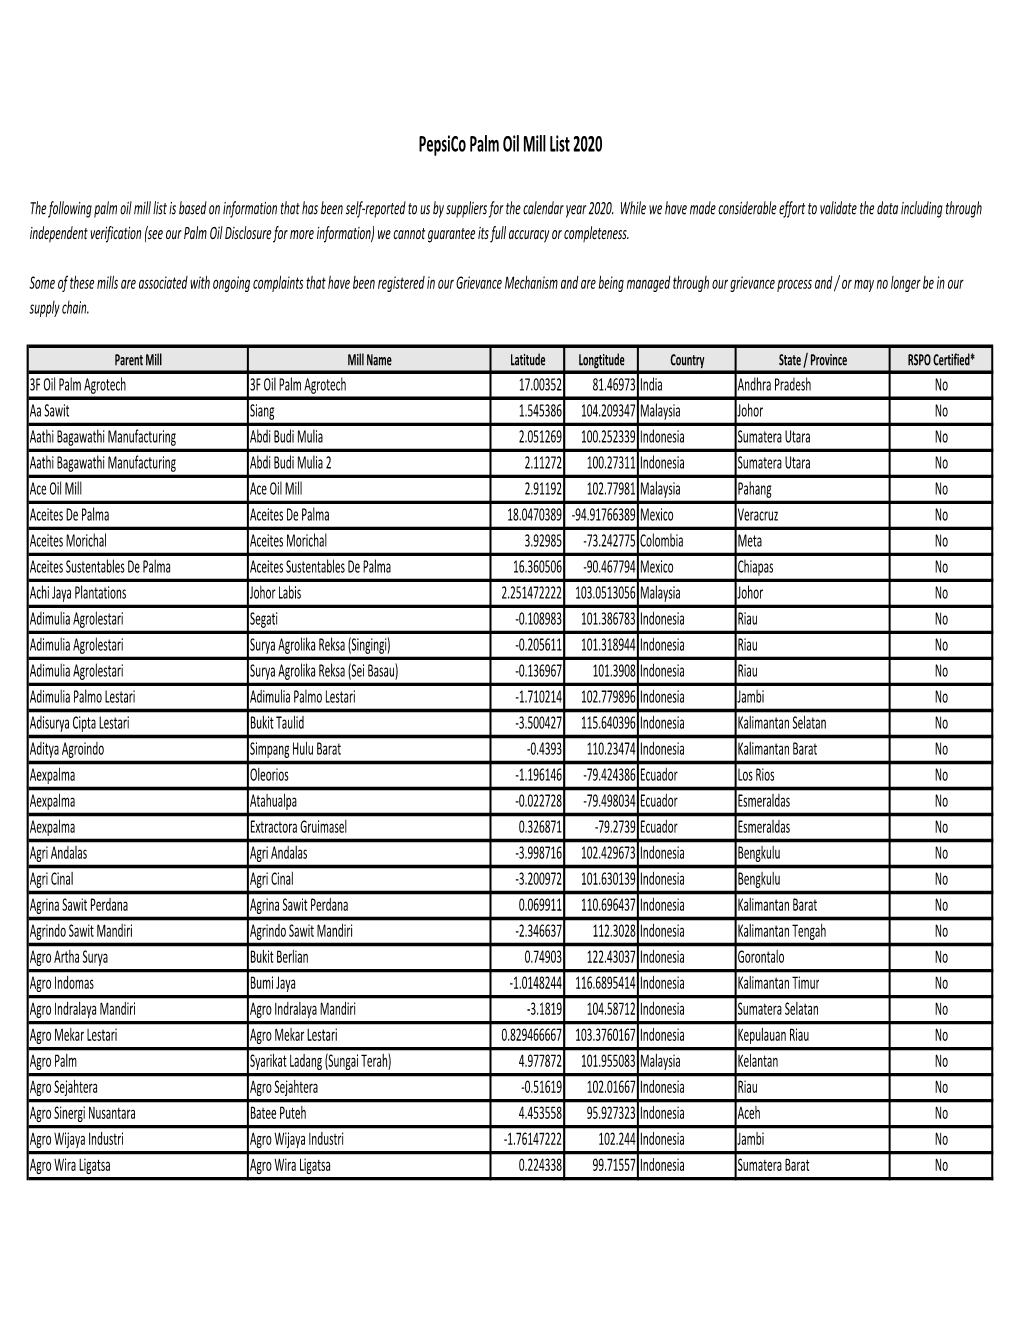 Pepsico Mill List 2020 FINAL.Xlsx